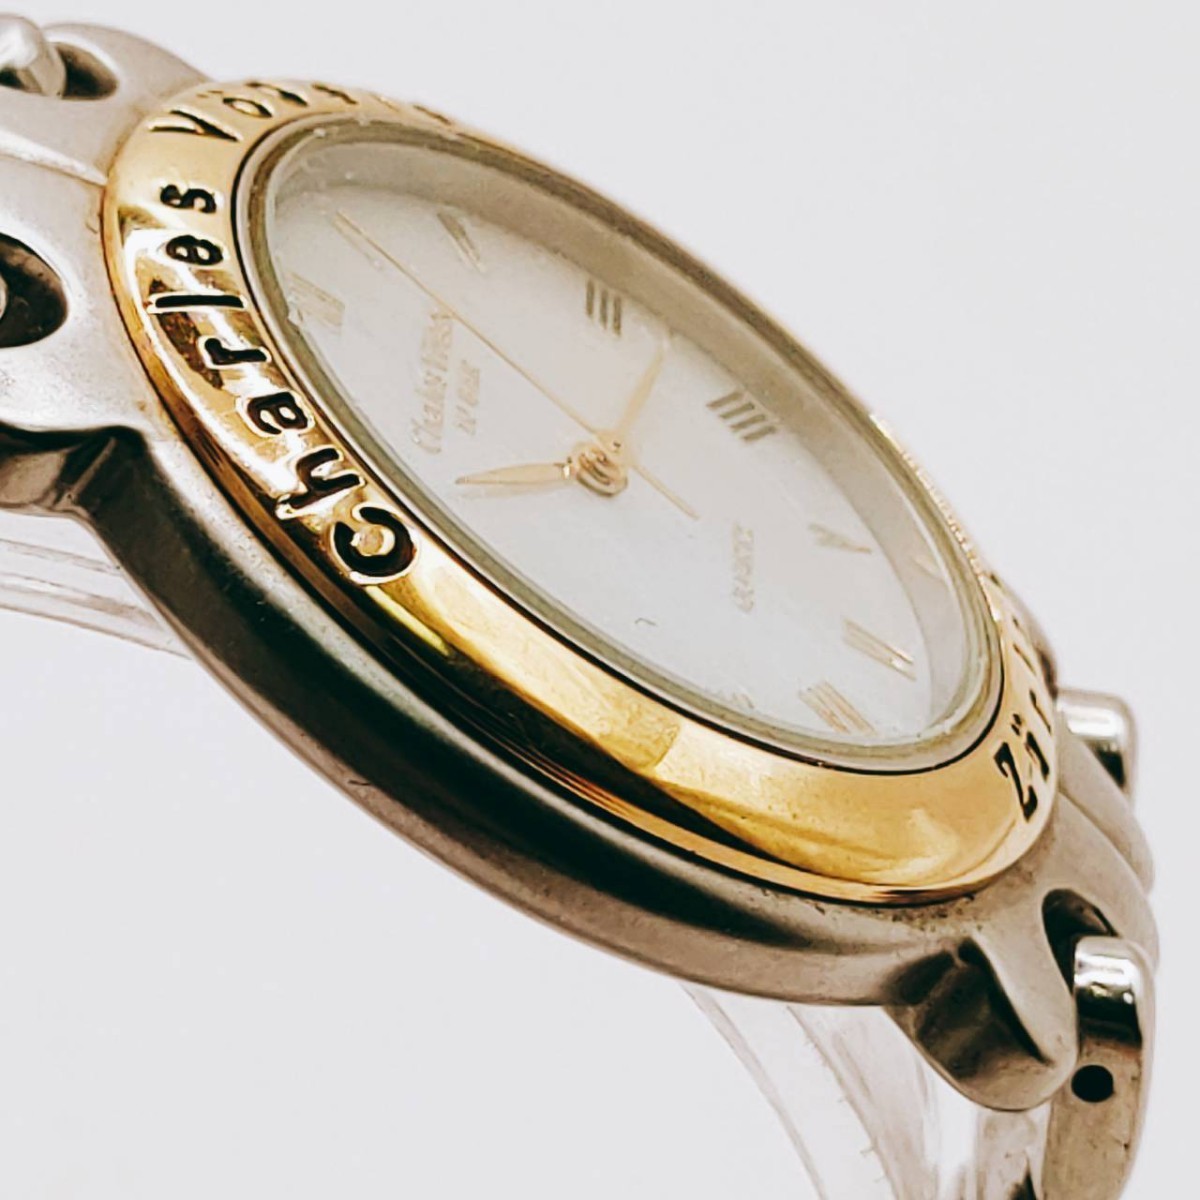 #1 Charles Vogele シャルルフォーゲル 腕時計 アナログ 3針 シェル色文字盤 シルバー基調 時計 とけい トケイ アクセサリー ヴィンテージ_画像7